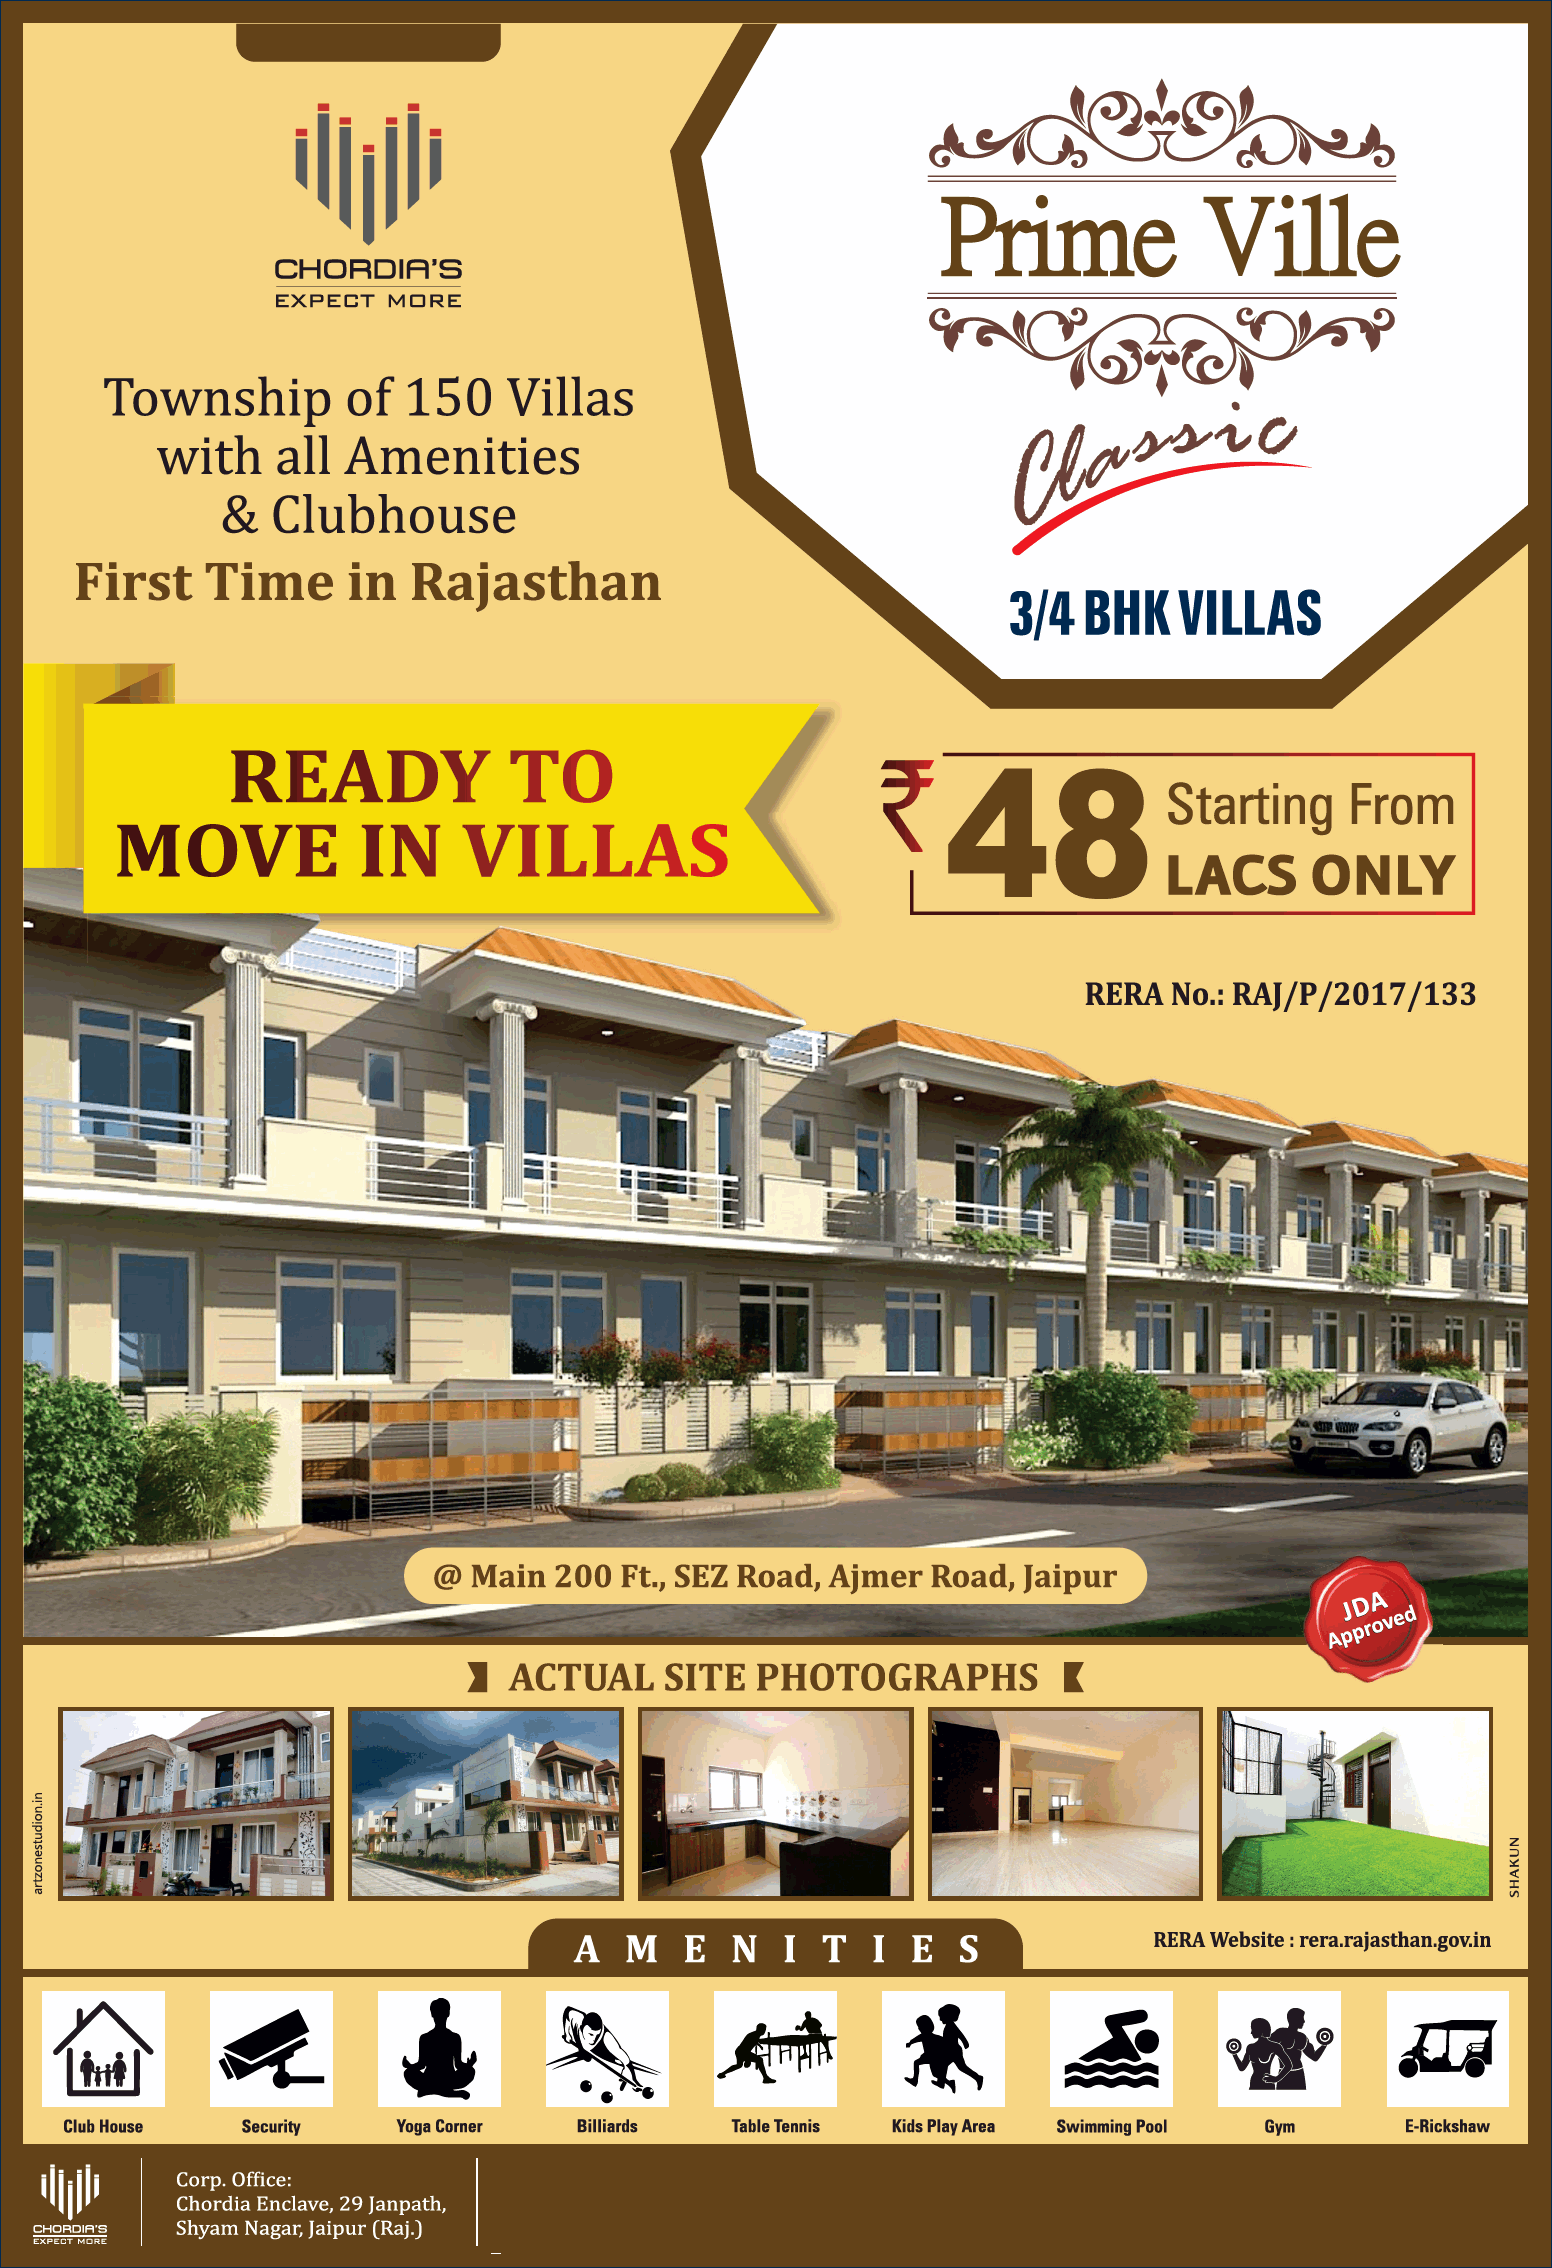 Ready to move in villas at Chordias Prime Ville, Jaipur